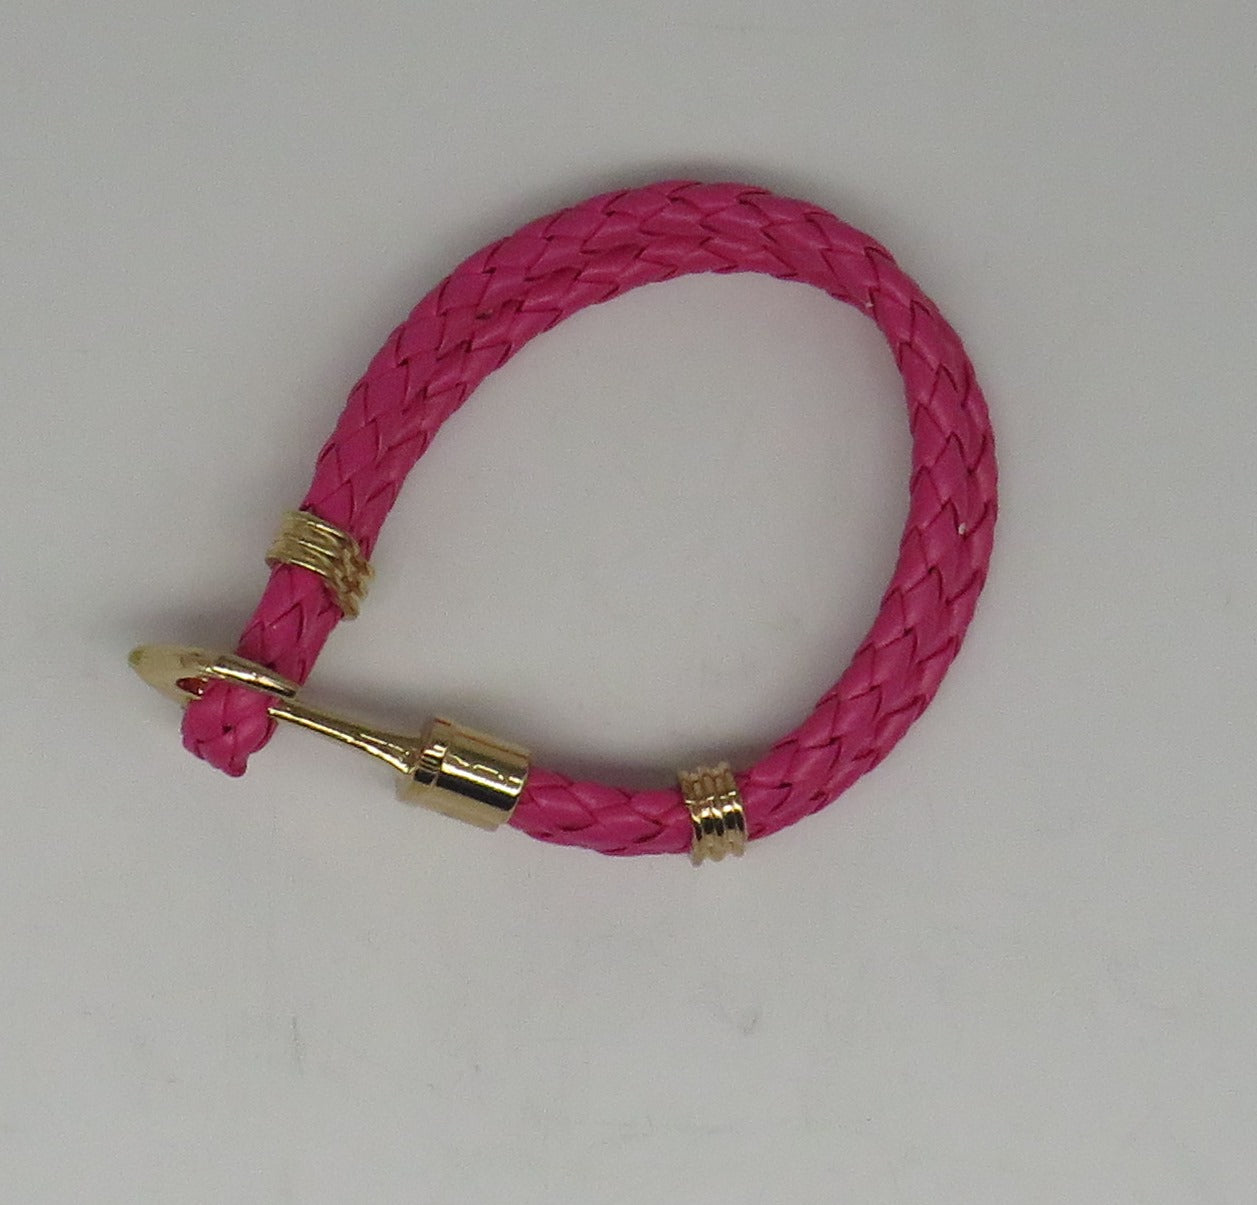 Unisex Leather Handmade Braided Cuff Anchor Bangle Bracelet Wristband Rose Red-Gold